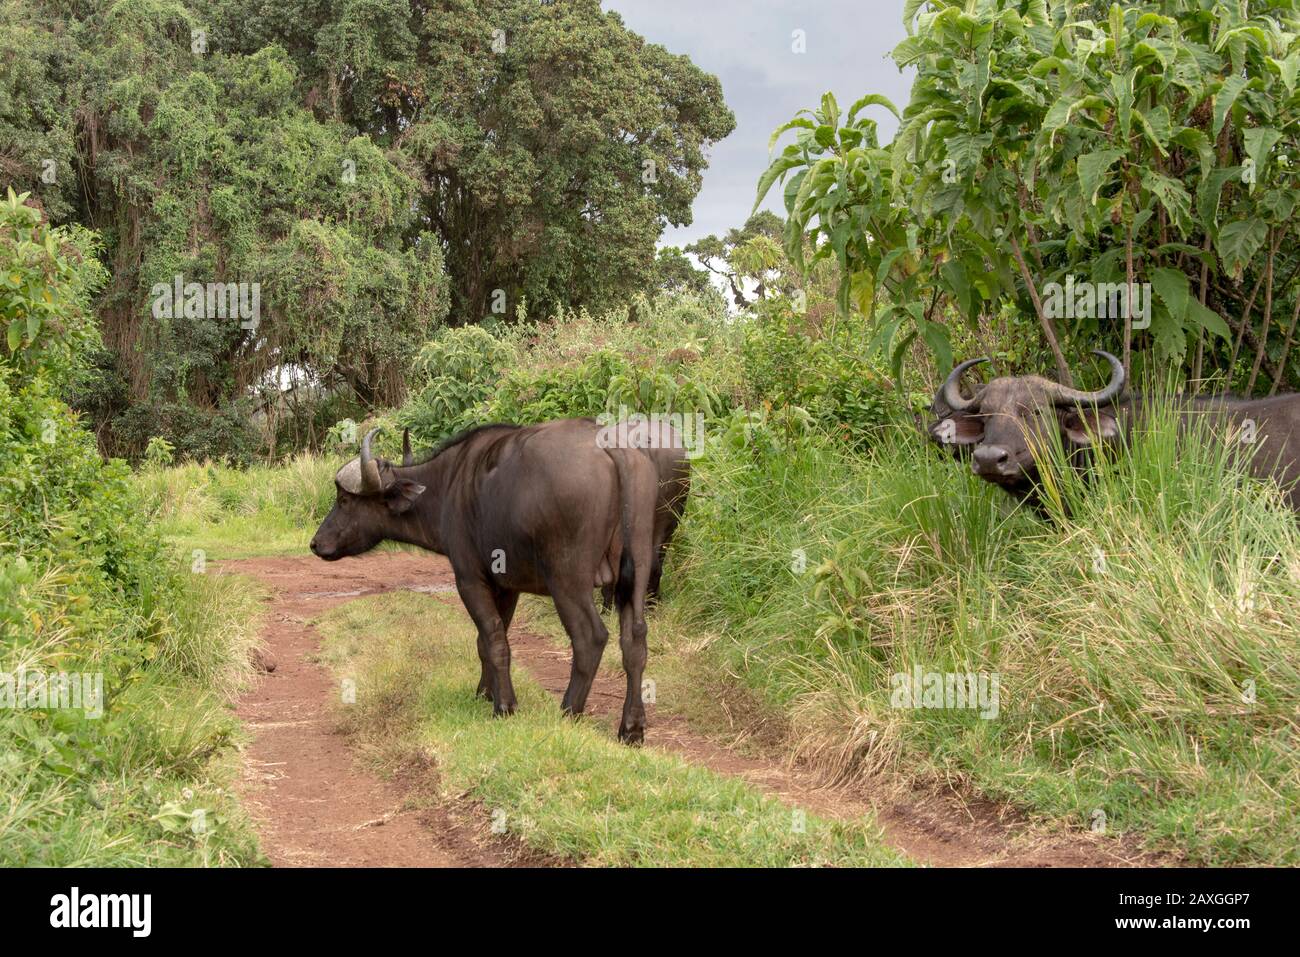 Buffalo on the road side, outside of Ngorongoro Crater conservation area Stock Photo